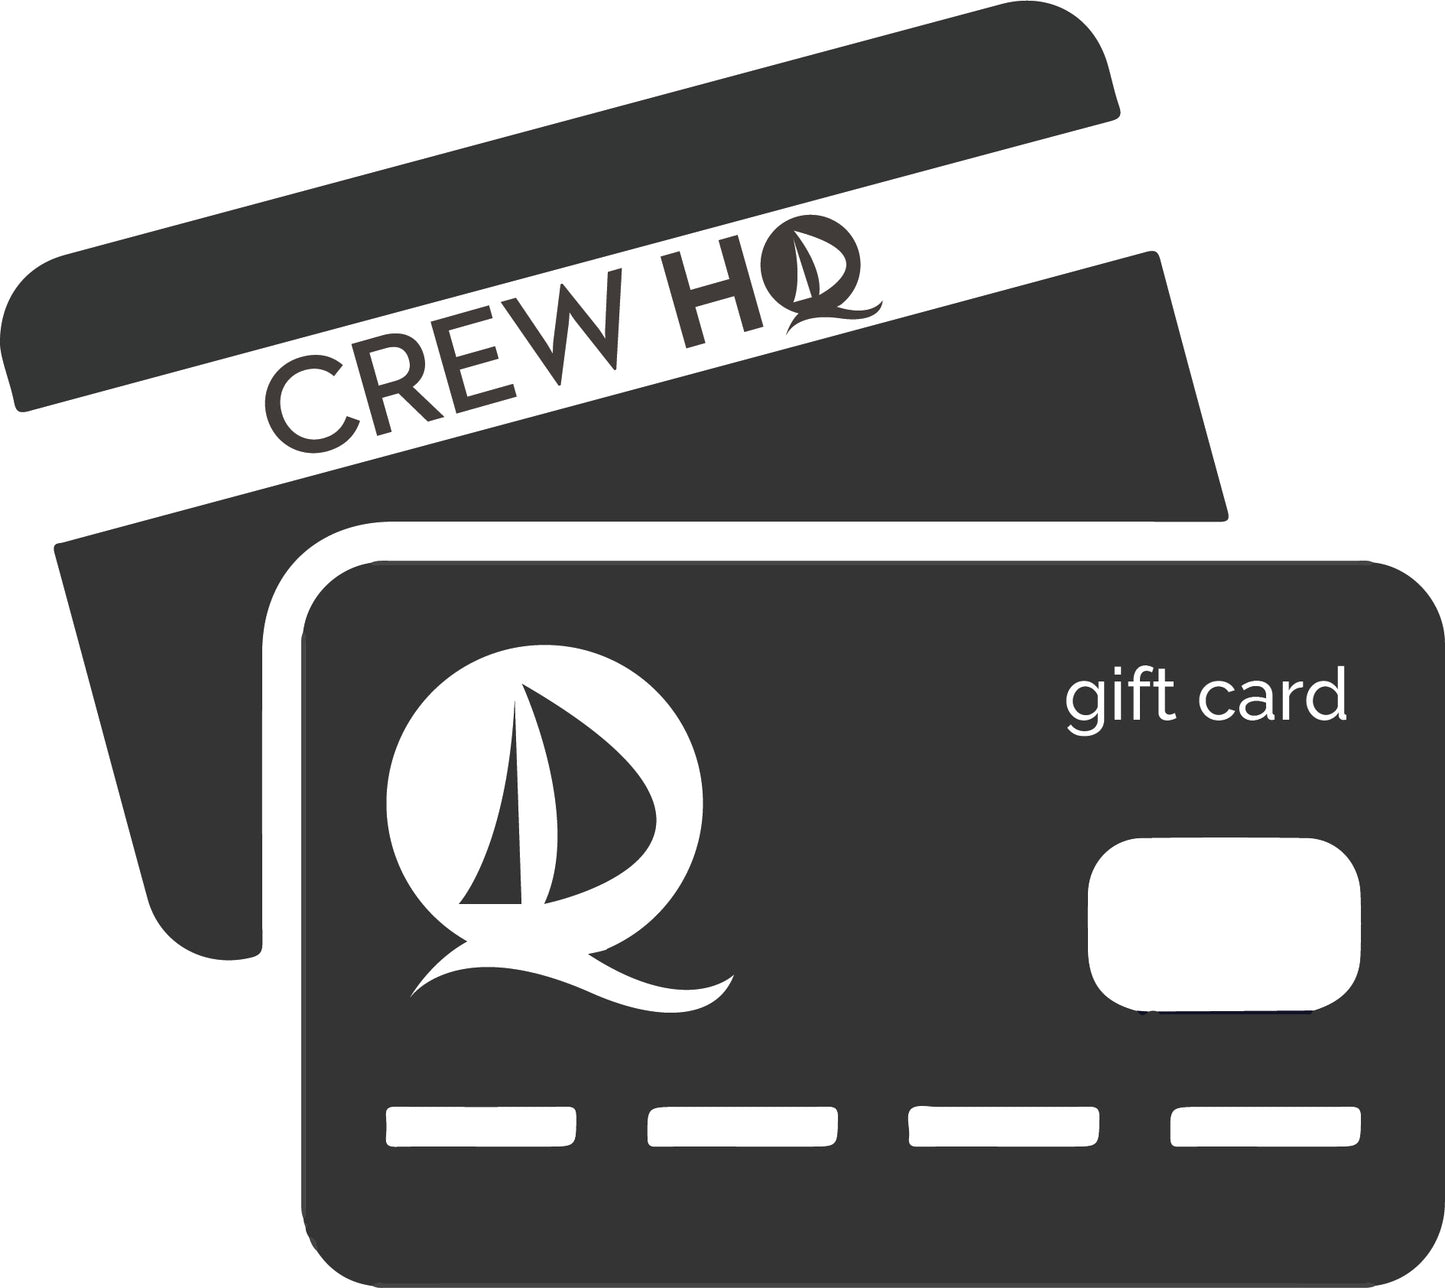 Crew HQ - Gift Card